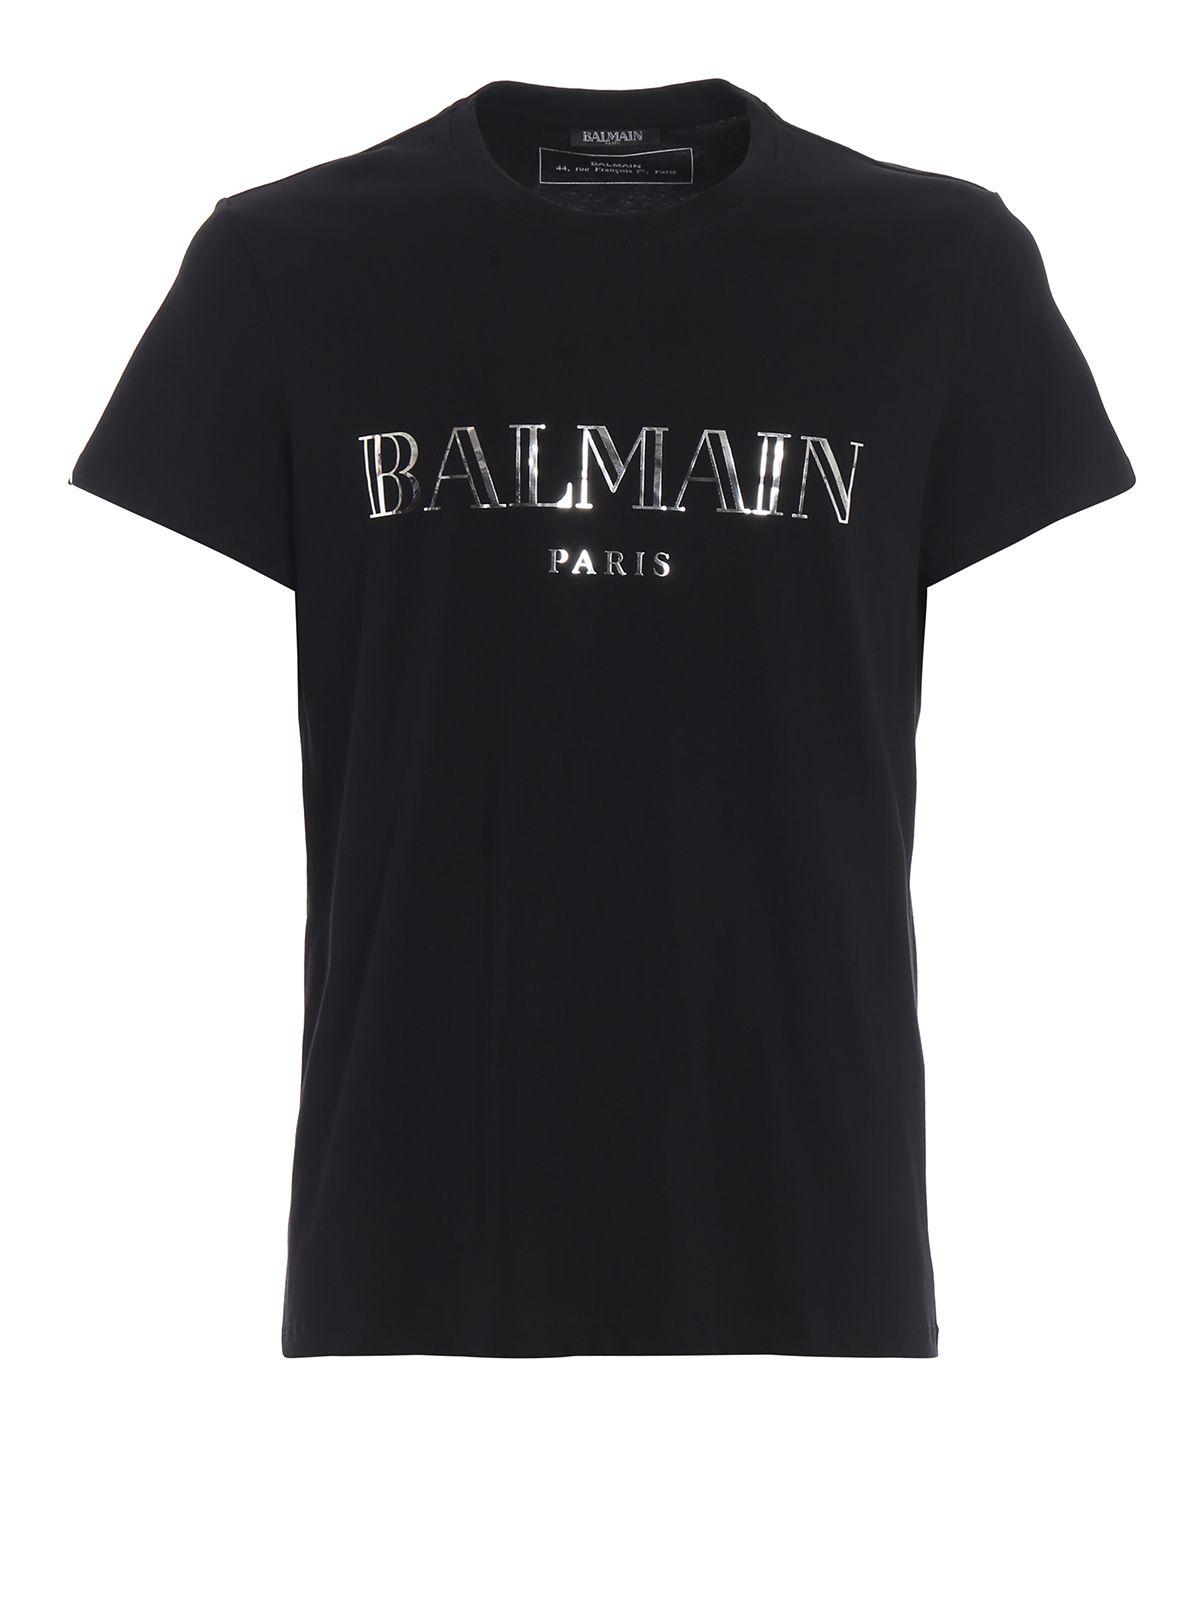 Lyst - Balmain Black Cotton T-shirt in Black for Men - Save 38%